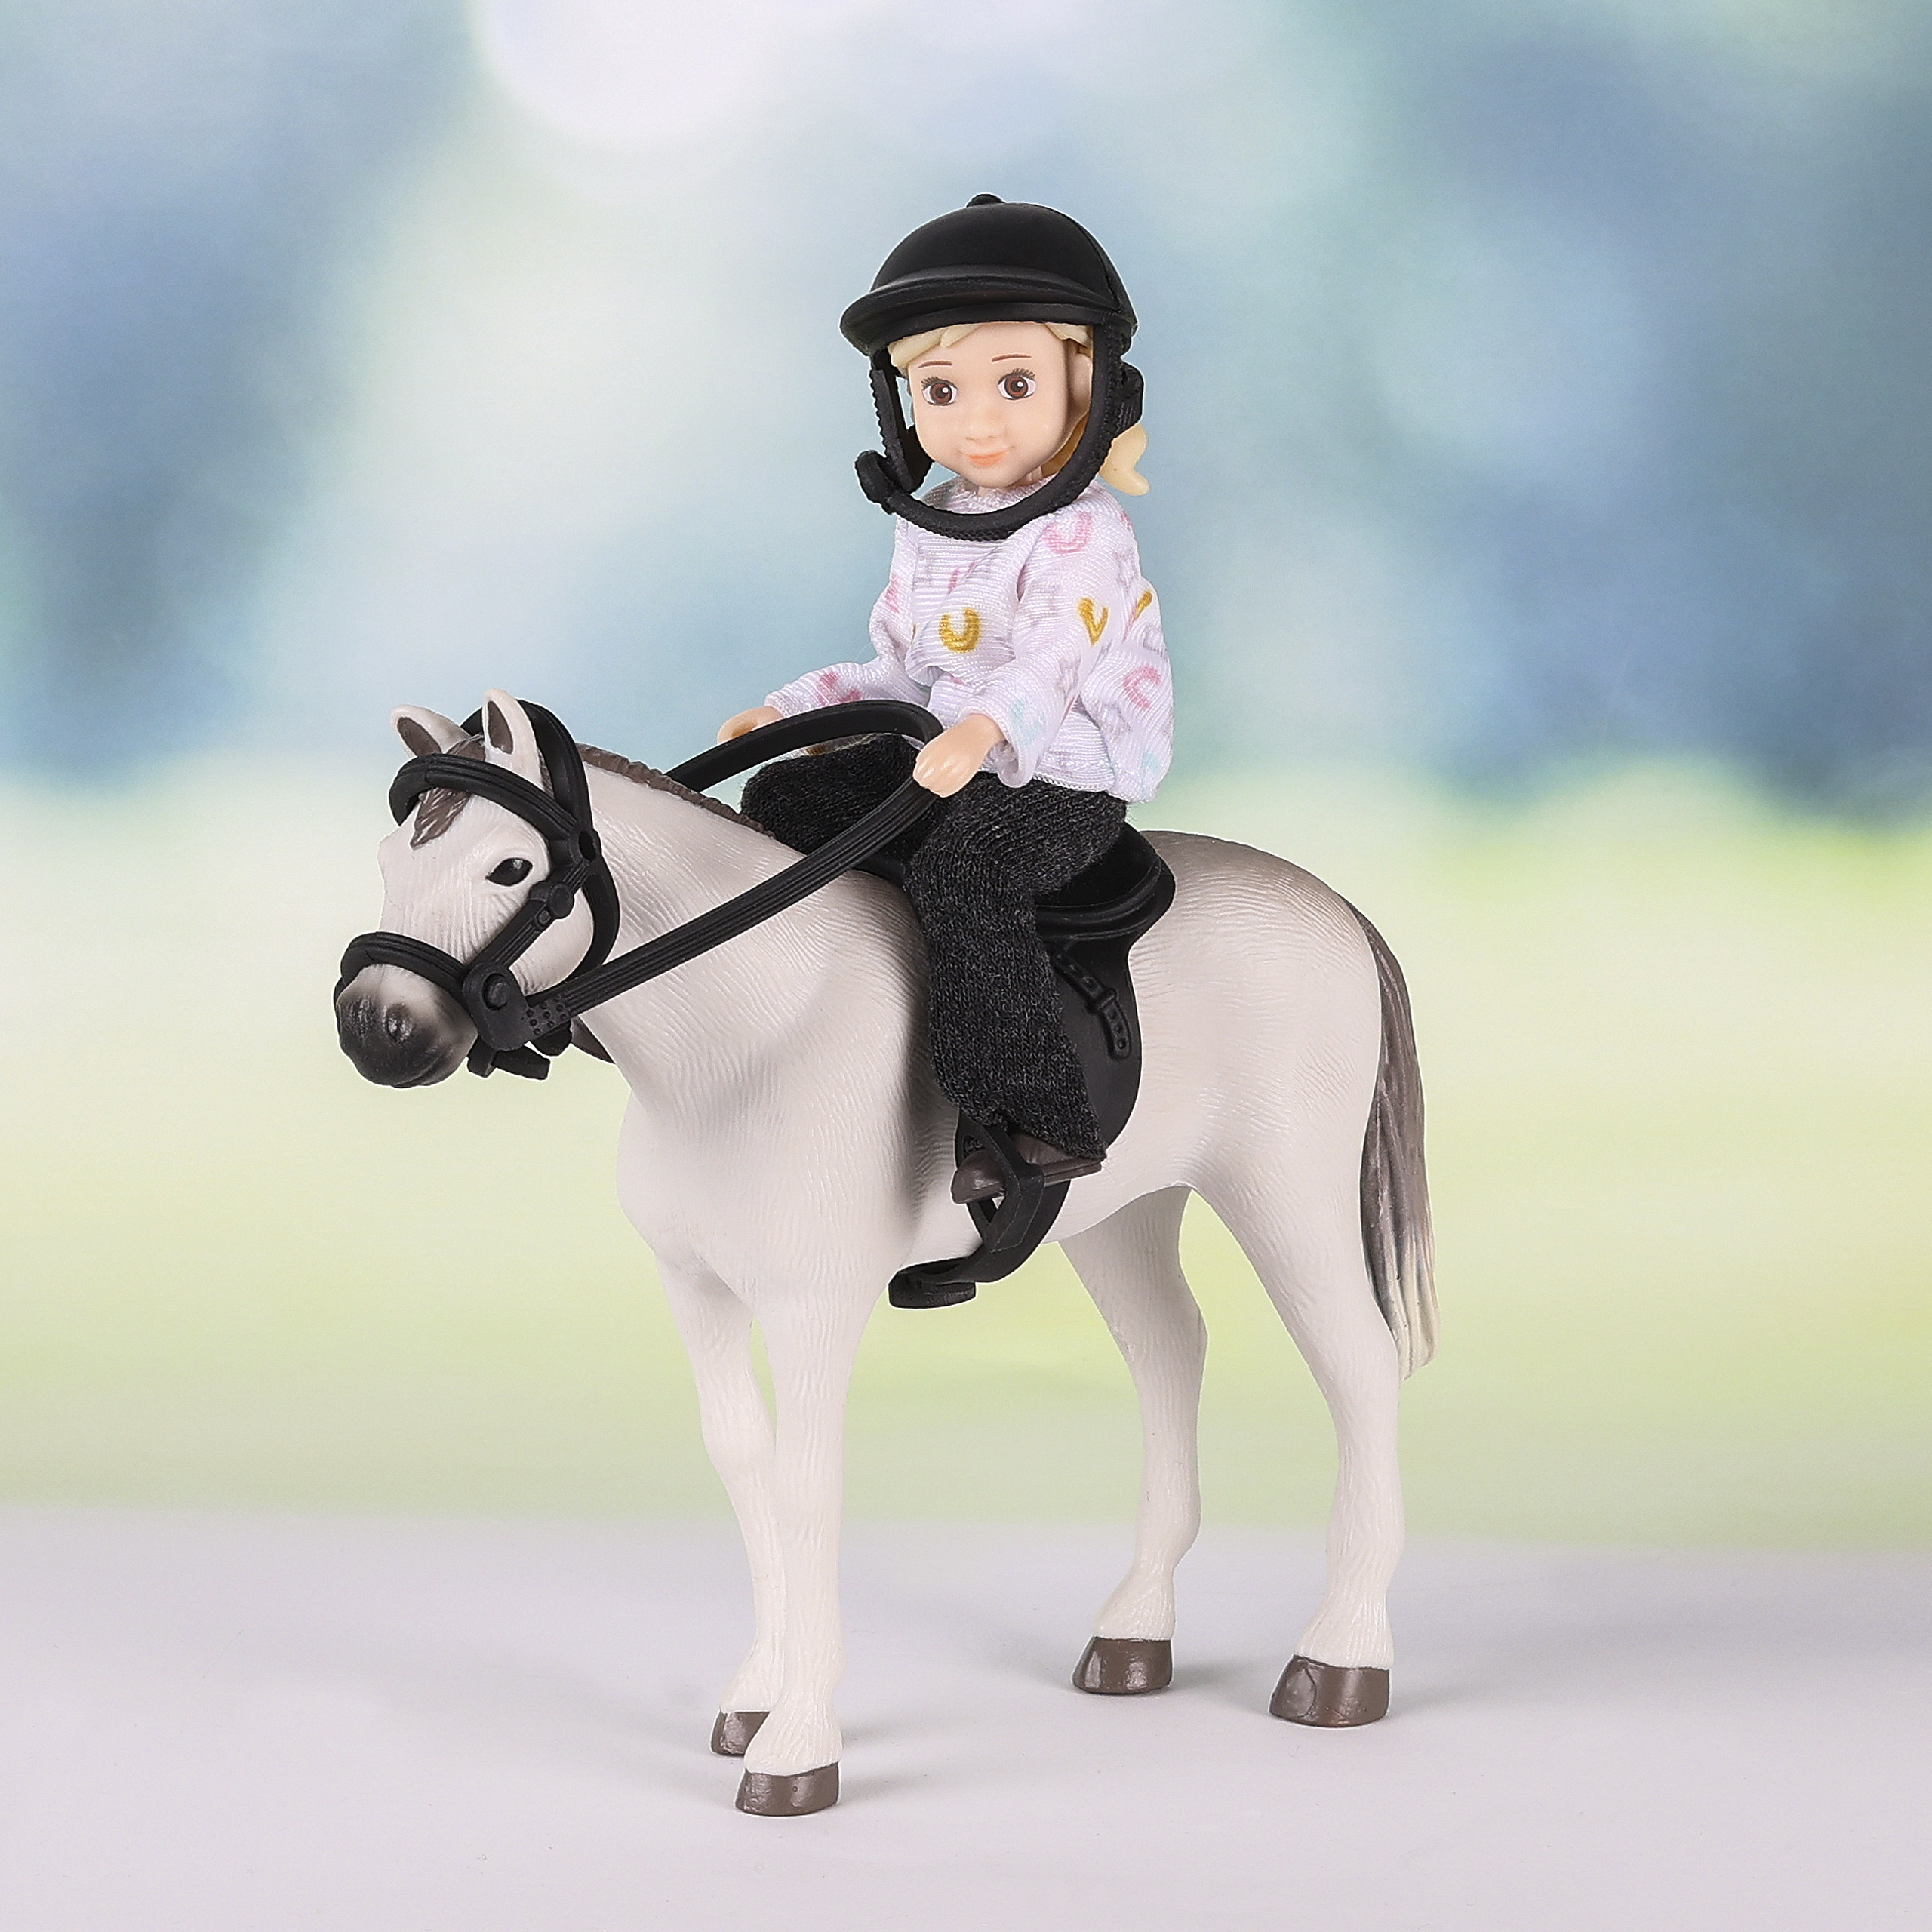 Dollhouse dolls & animals	 lundby	dollshouse doll with horse